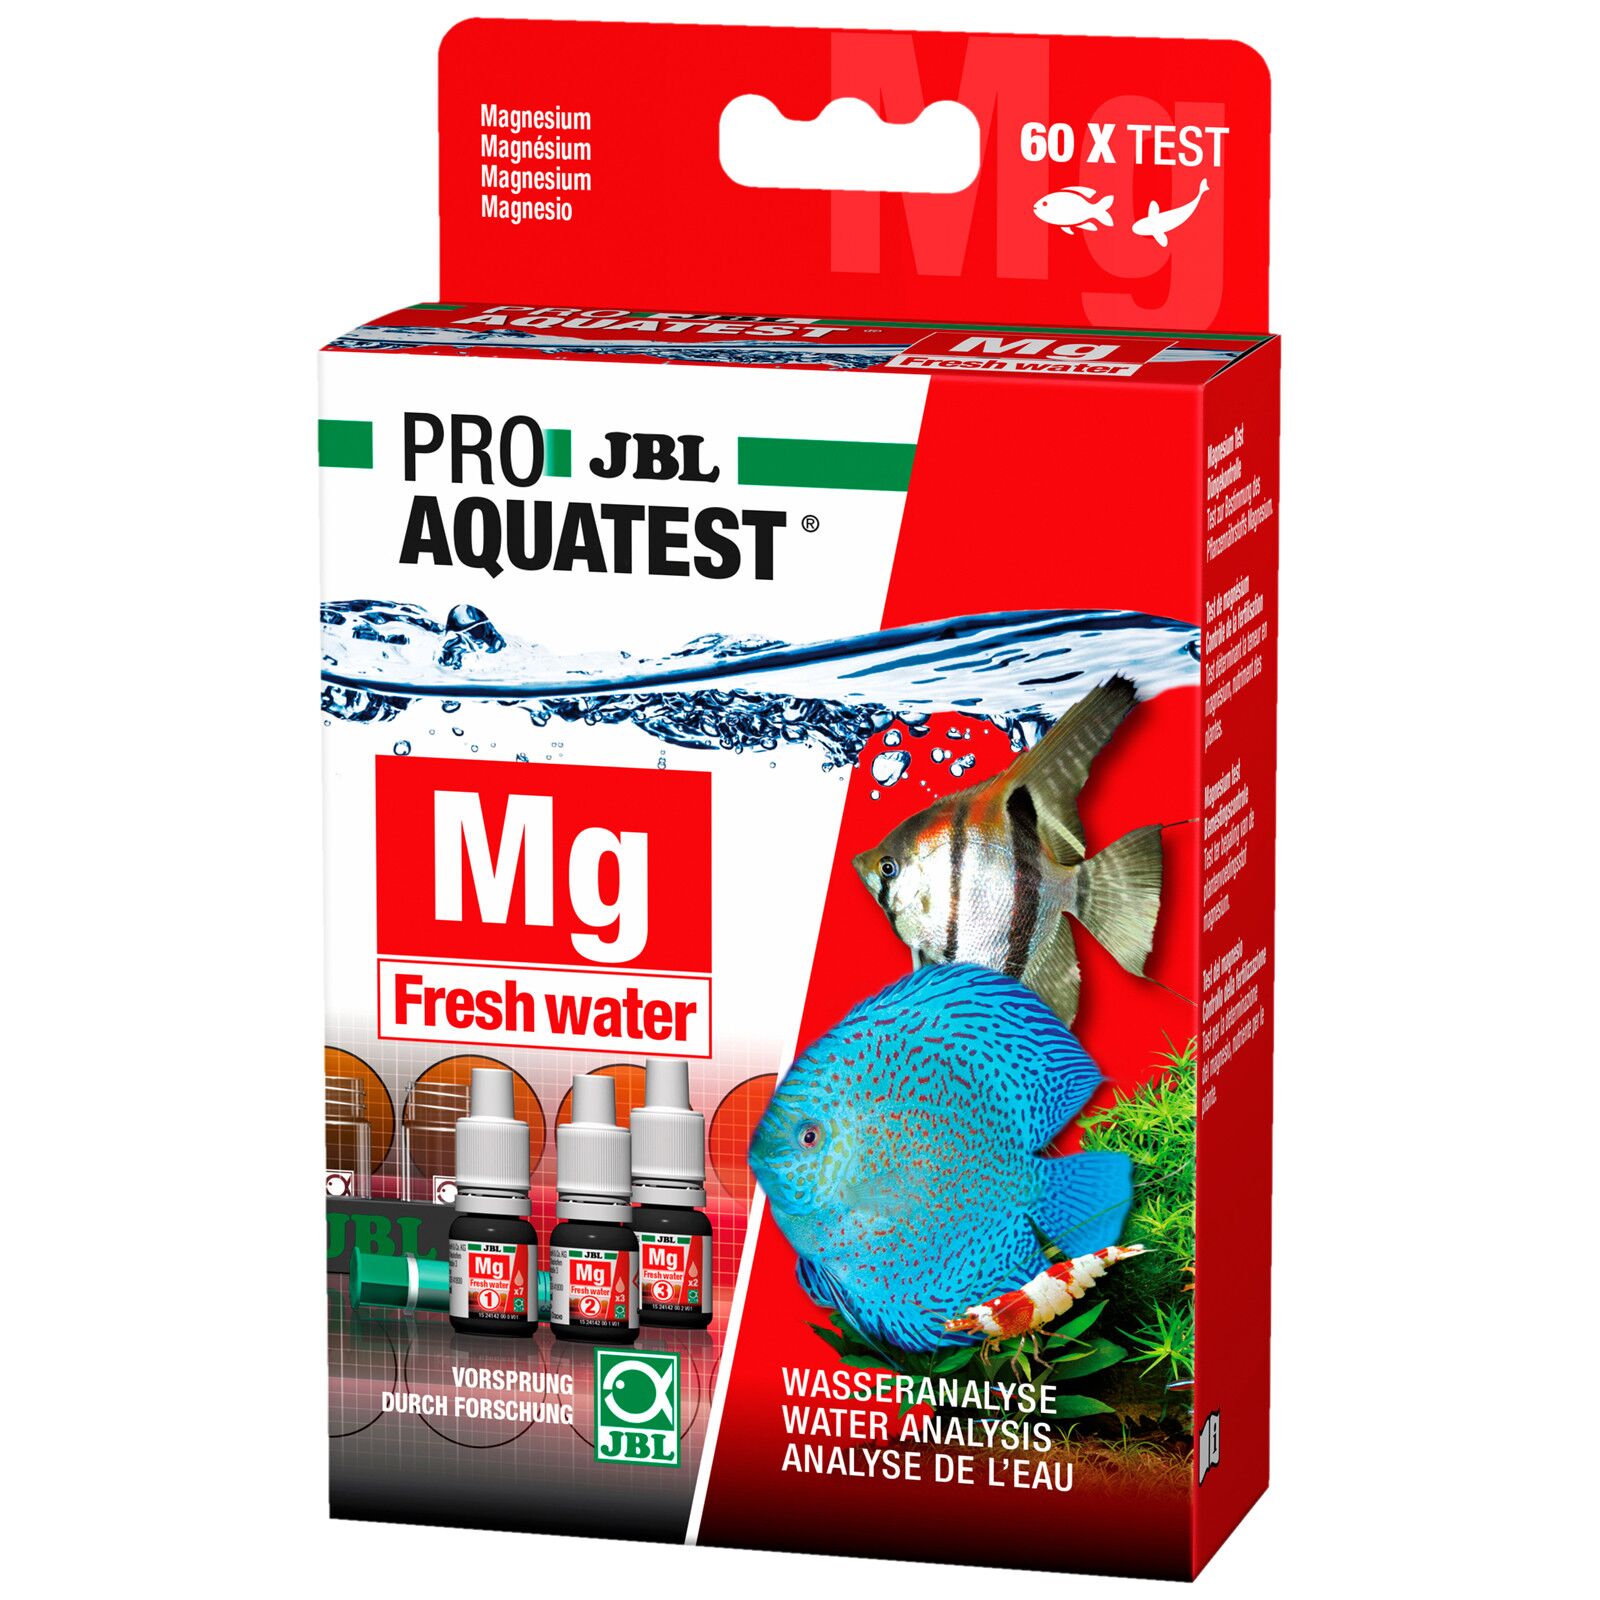 JBL - ProAquaTest - Mg Magnesium - S&uuml;&szlig;wasser